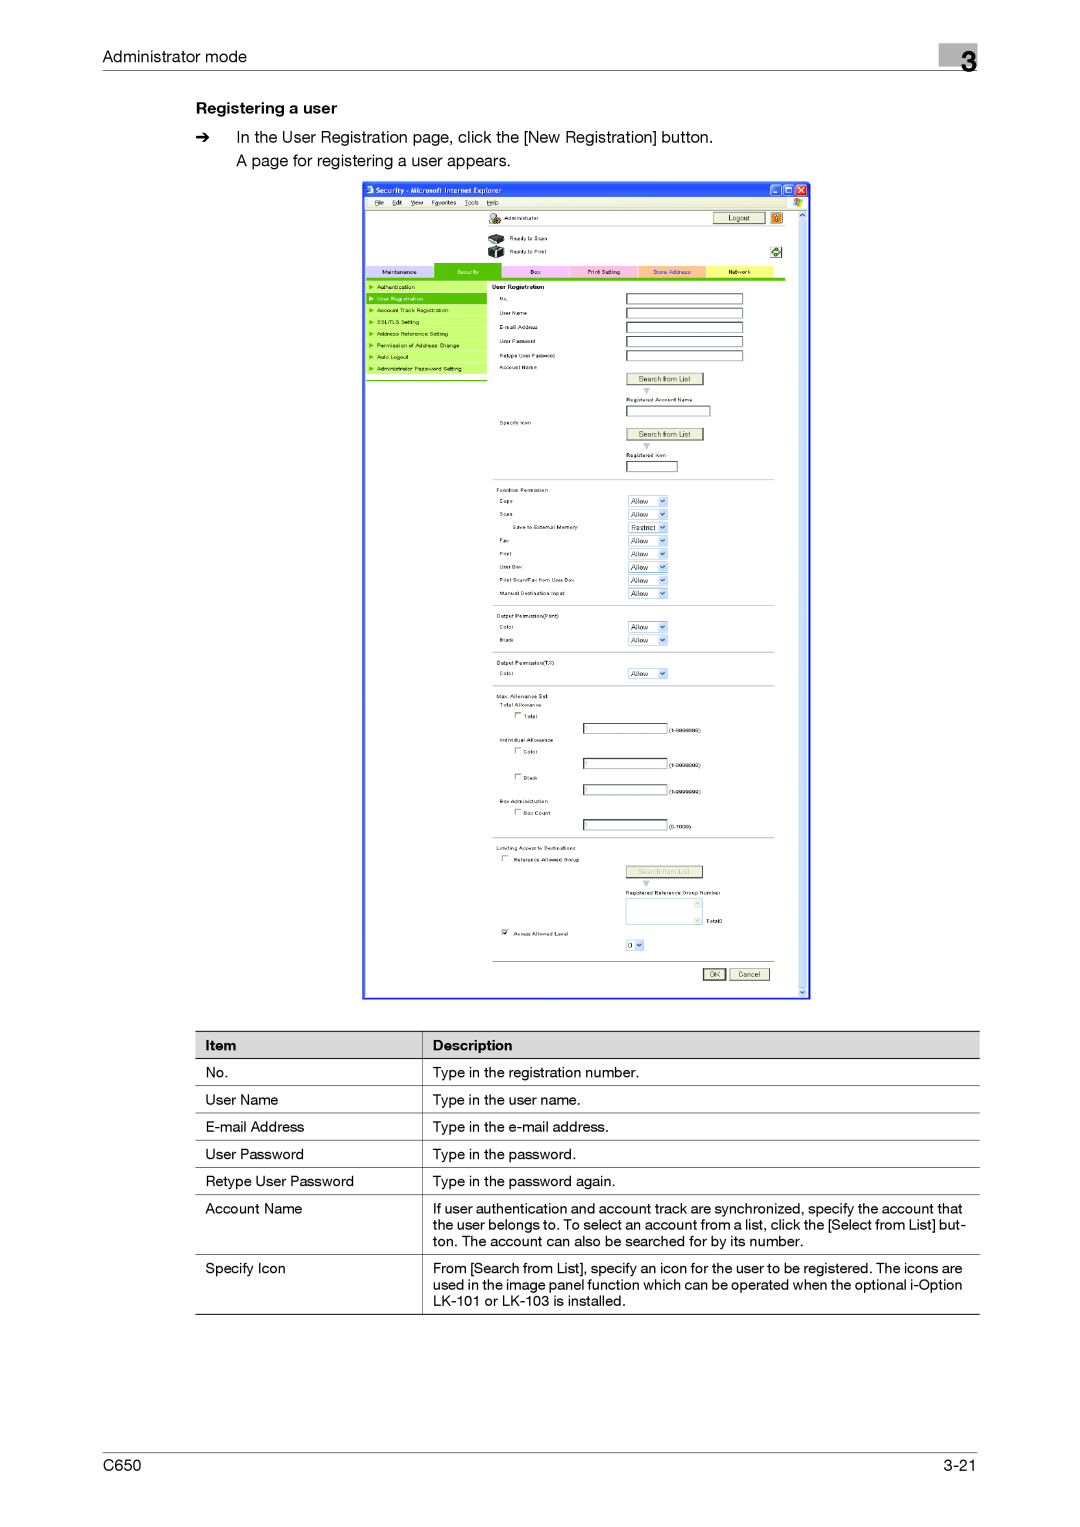 Konica Minolta C650 manual Administrator mode, Registering a user, 3-21 